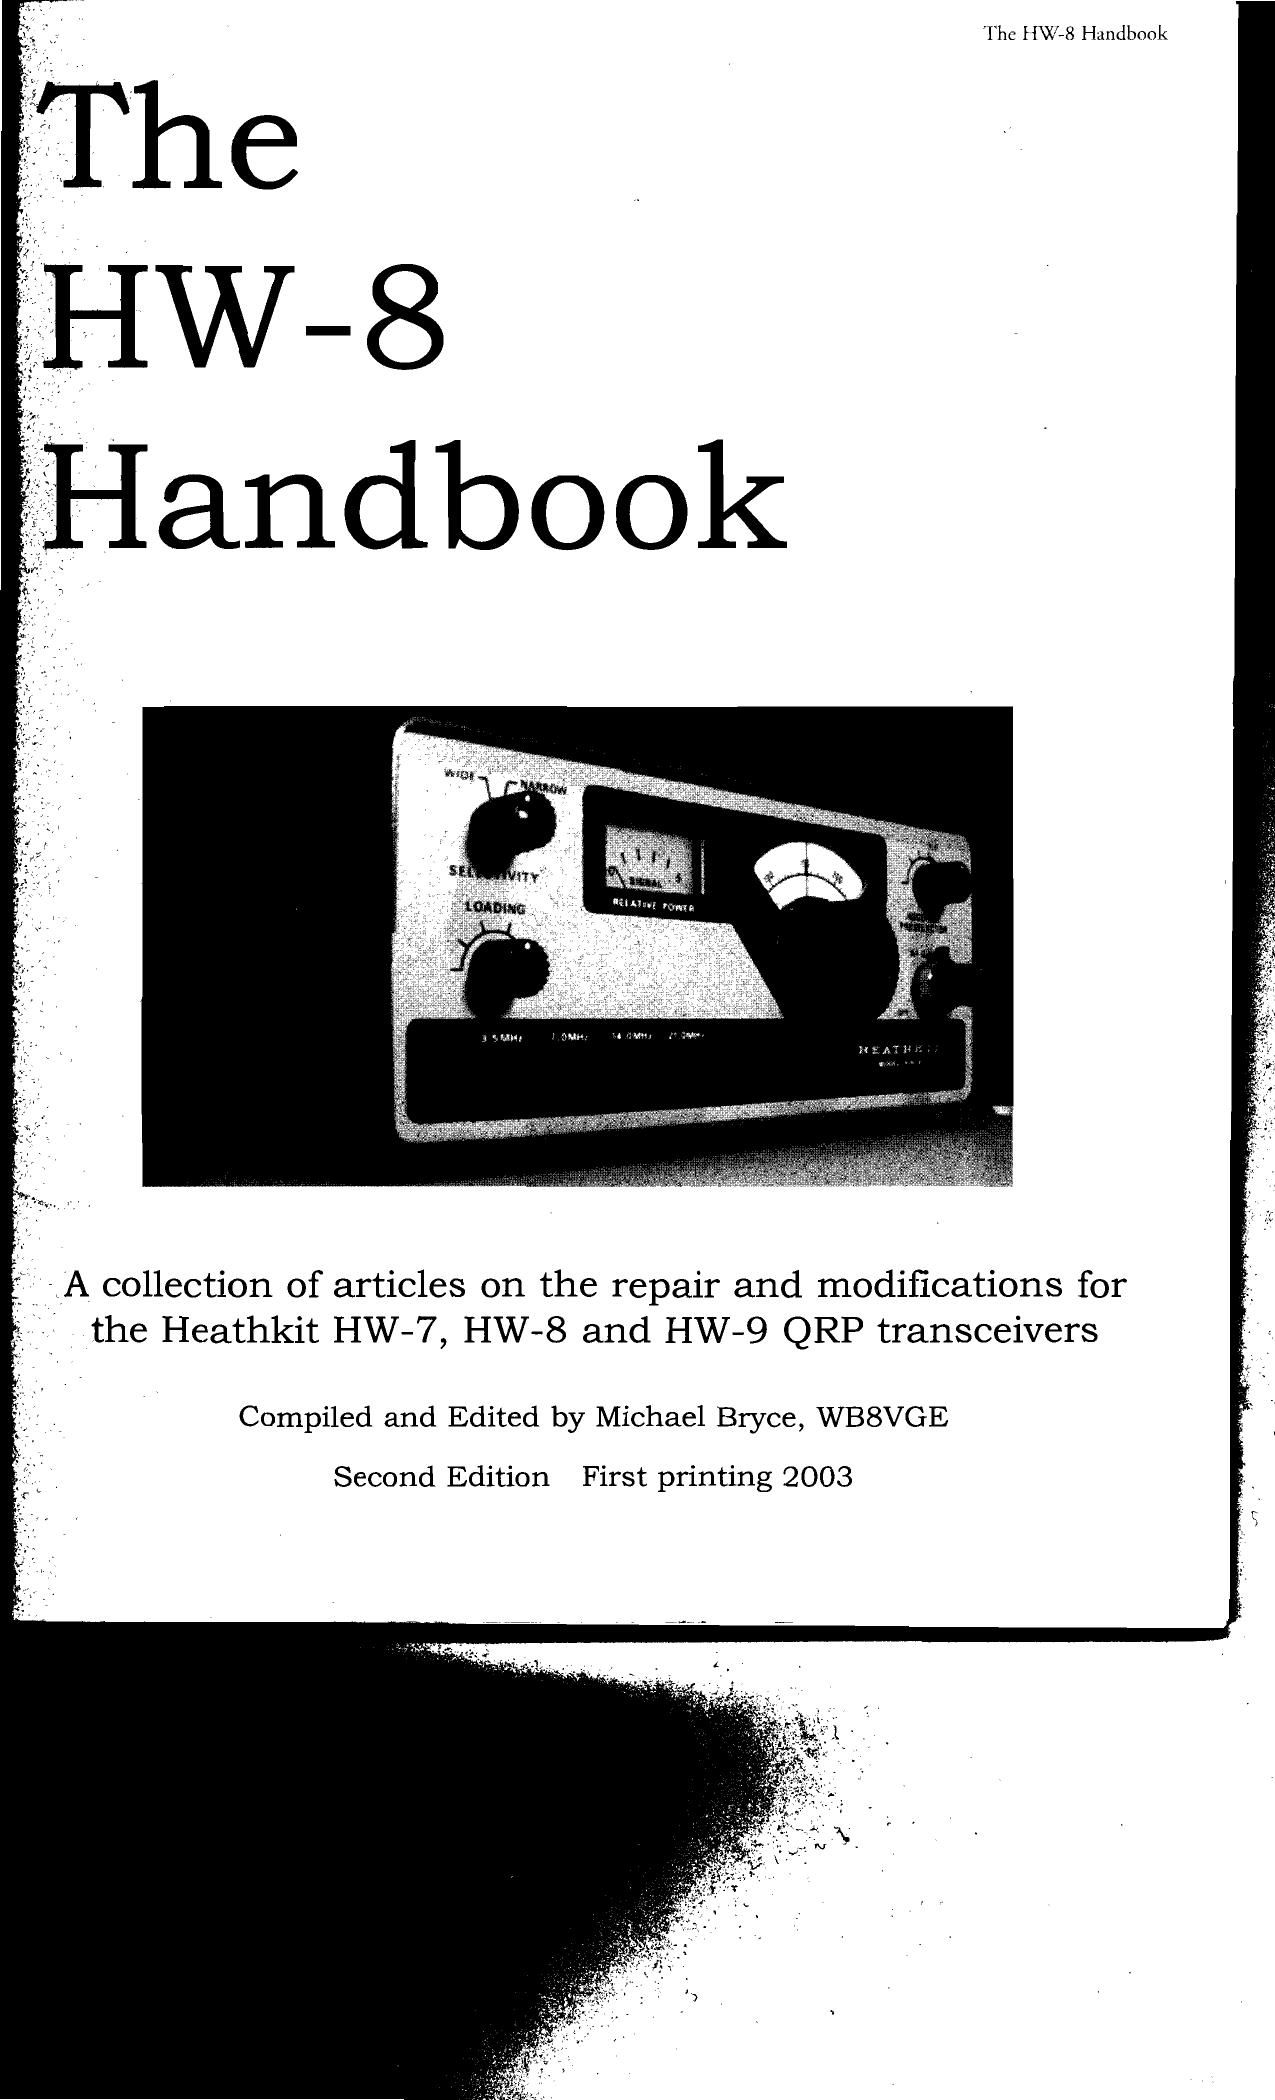 Heathkit HW 8 Handbook